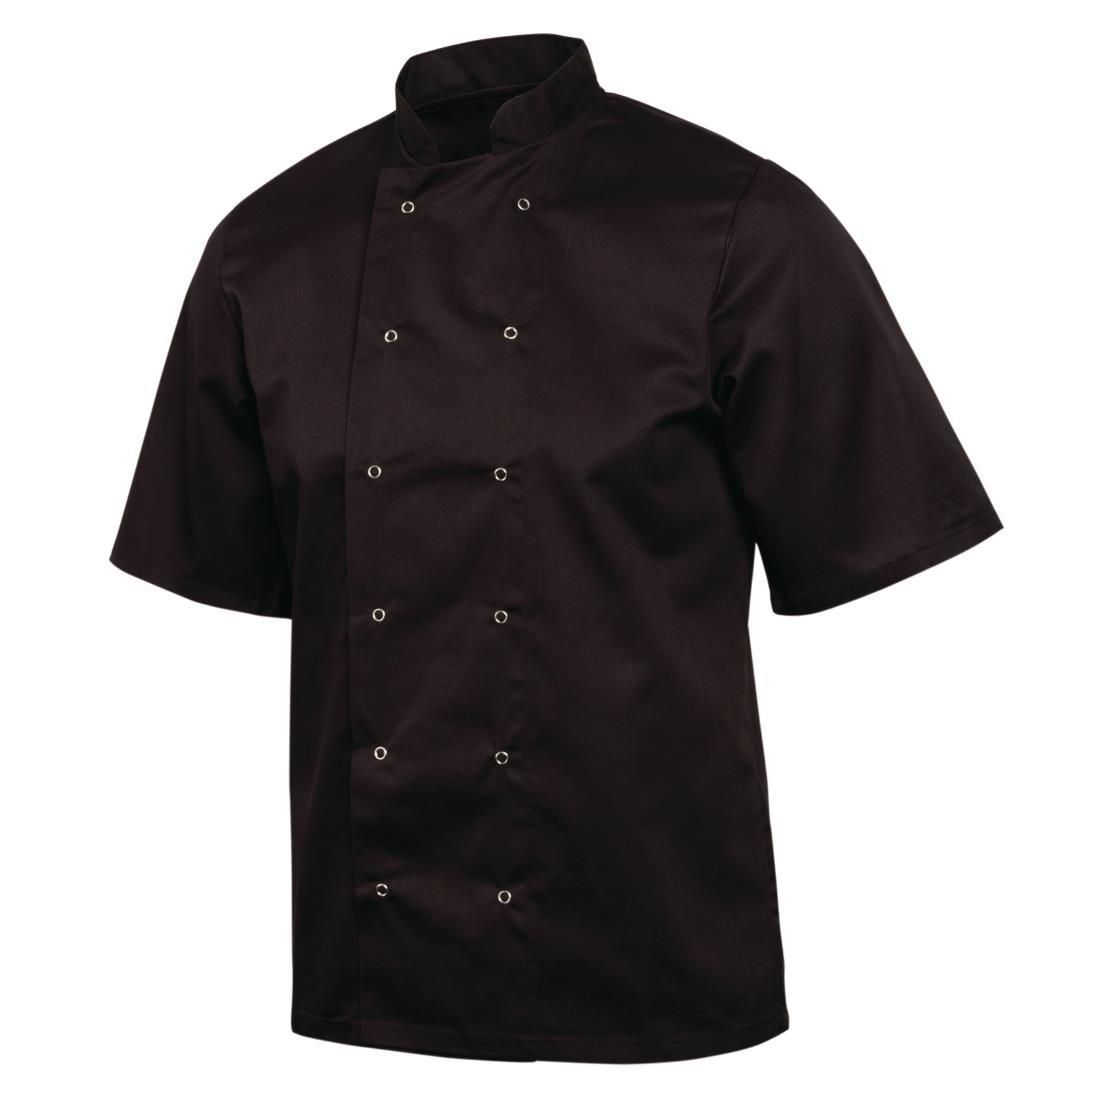 Whites Vegas Unisex Chefs Jacket Short Sleeve Black S - A439-S  - 5